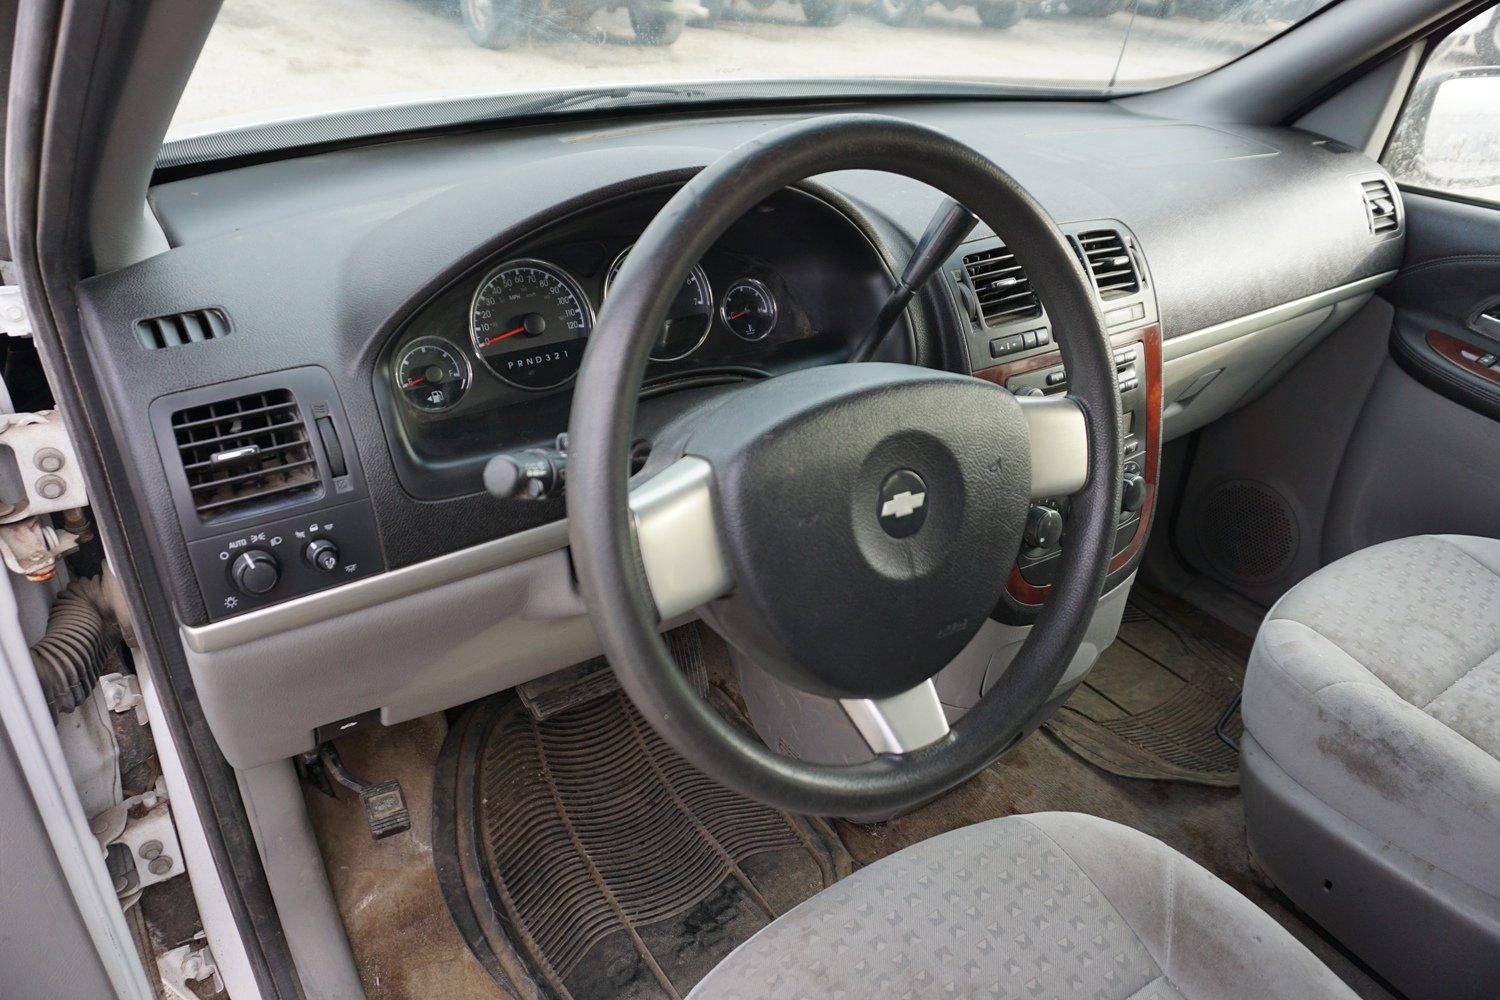 2007 Chevrolet Uplander LS Mini Van, VIN#       , 3.9 Liter V-6 Gas Engine, Automatic Transmission, 